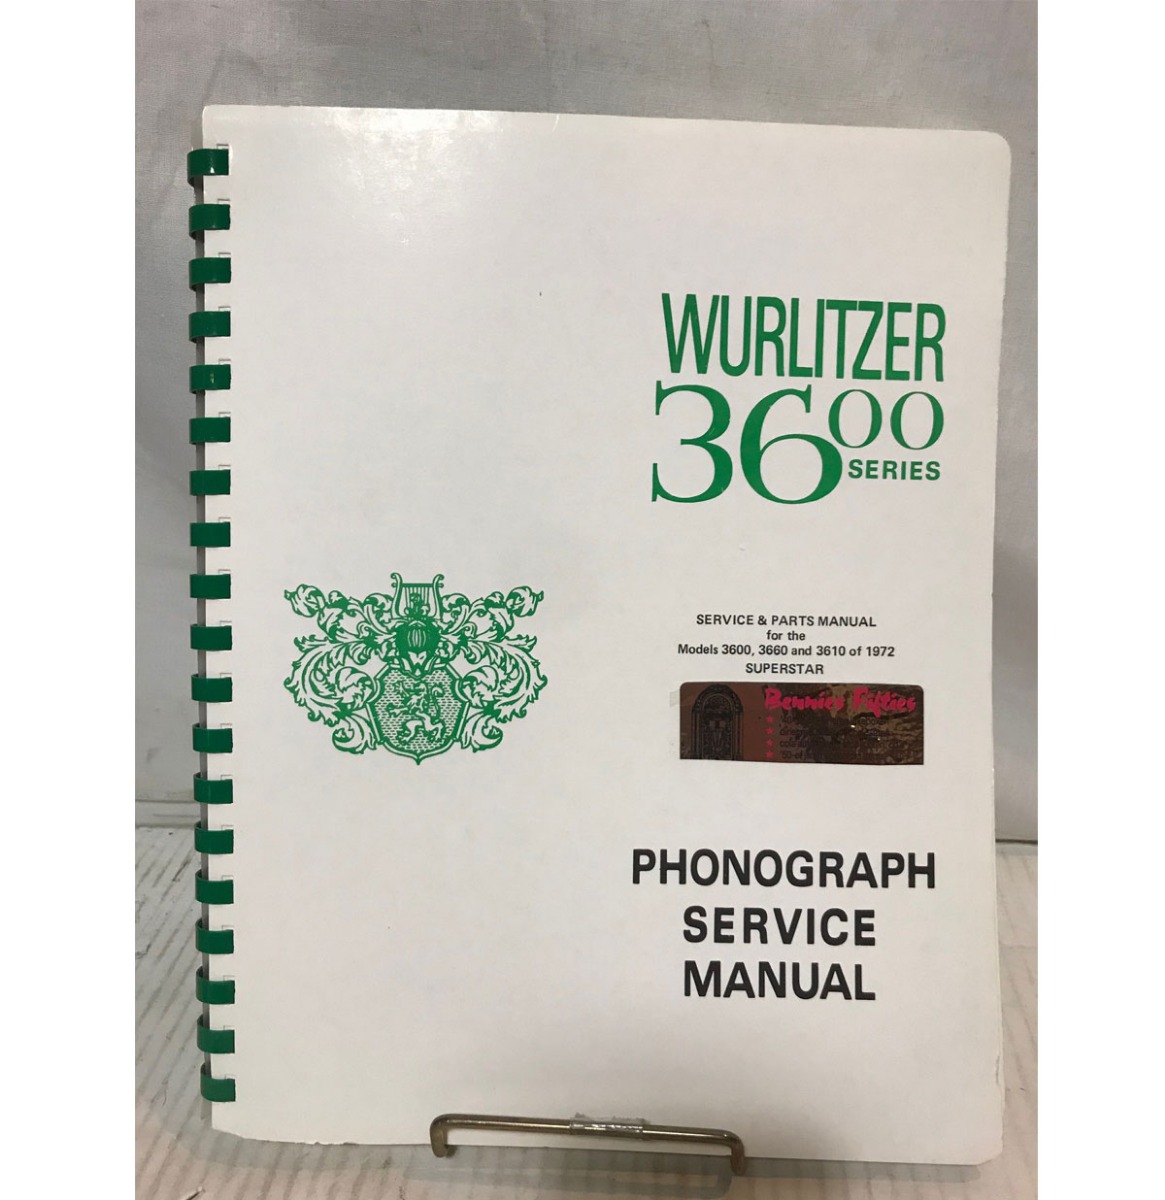 Service And Parts Manual For Wurlitzer 3600, 3660 or 1972 Superstar Jukebox Models